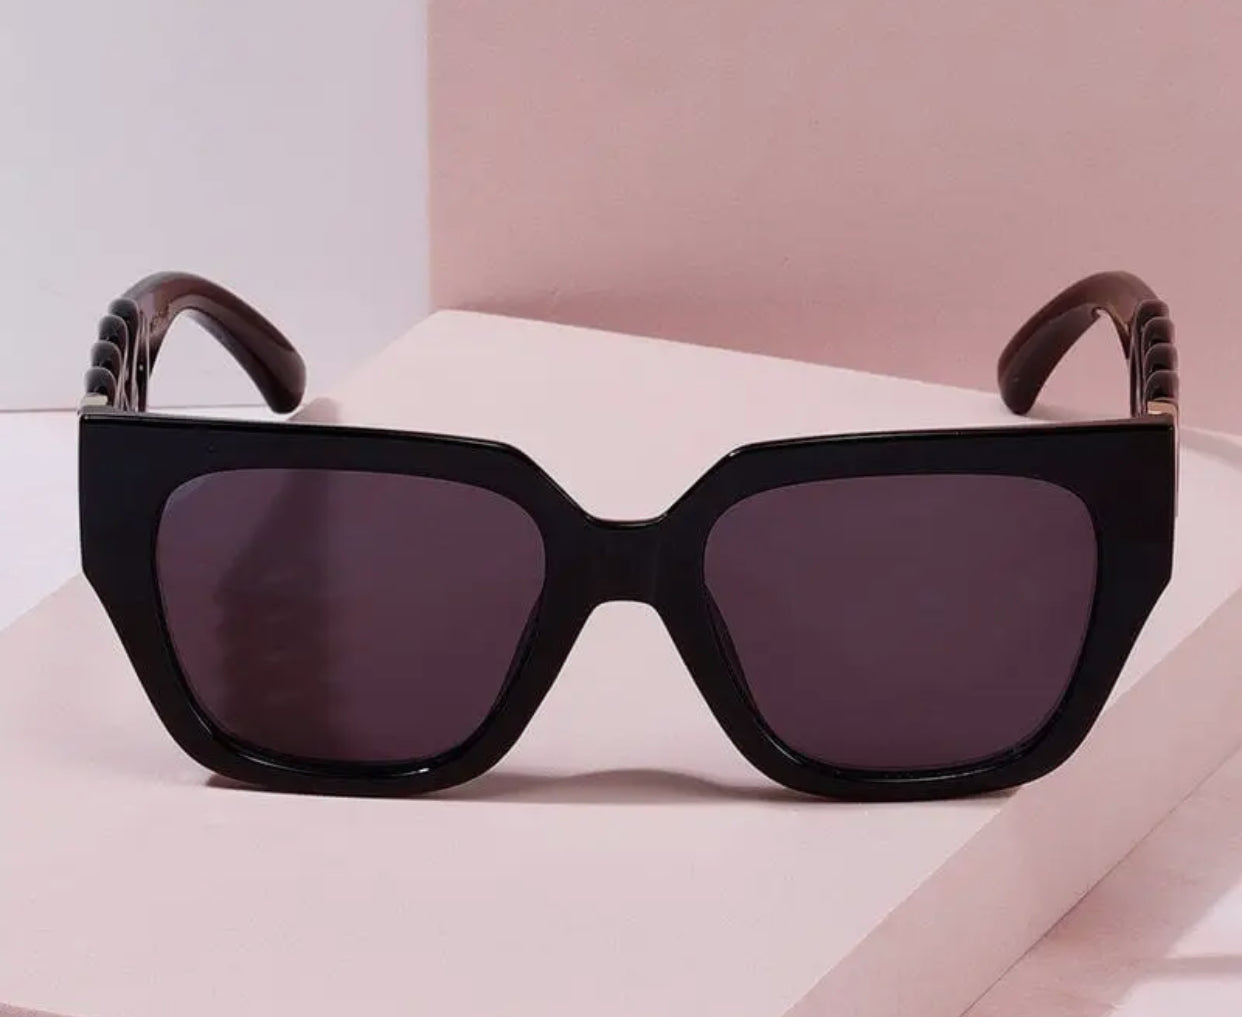 Vacay Mode Sunglasses